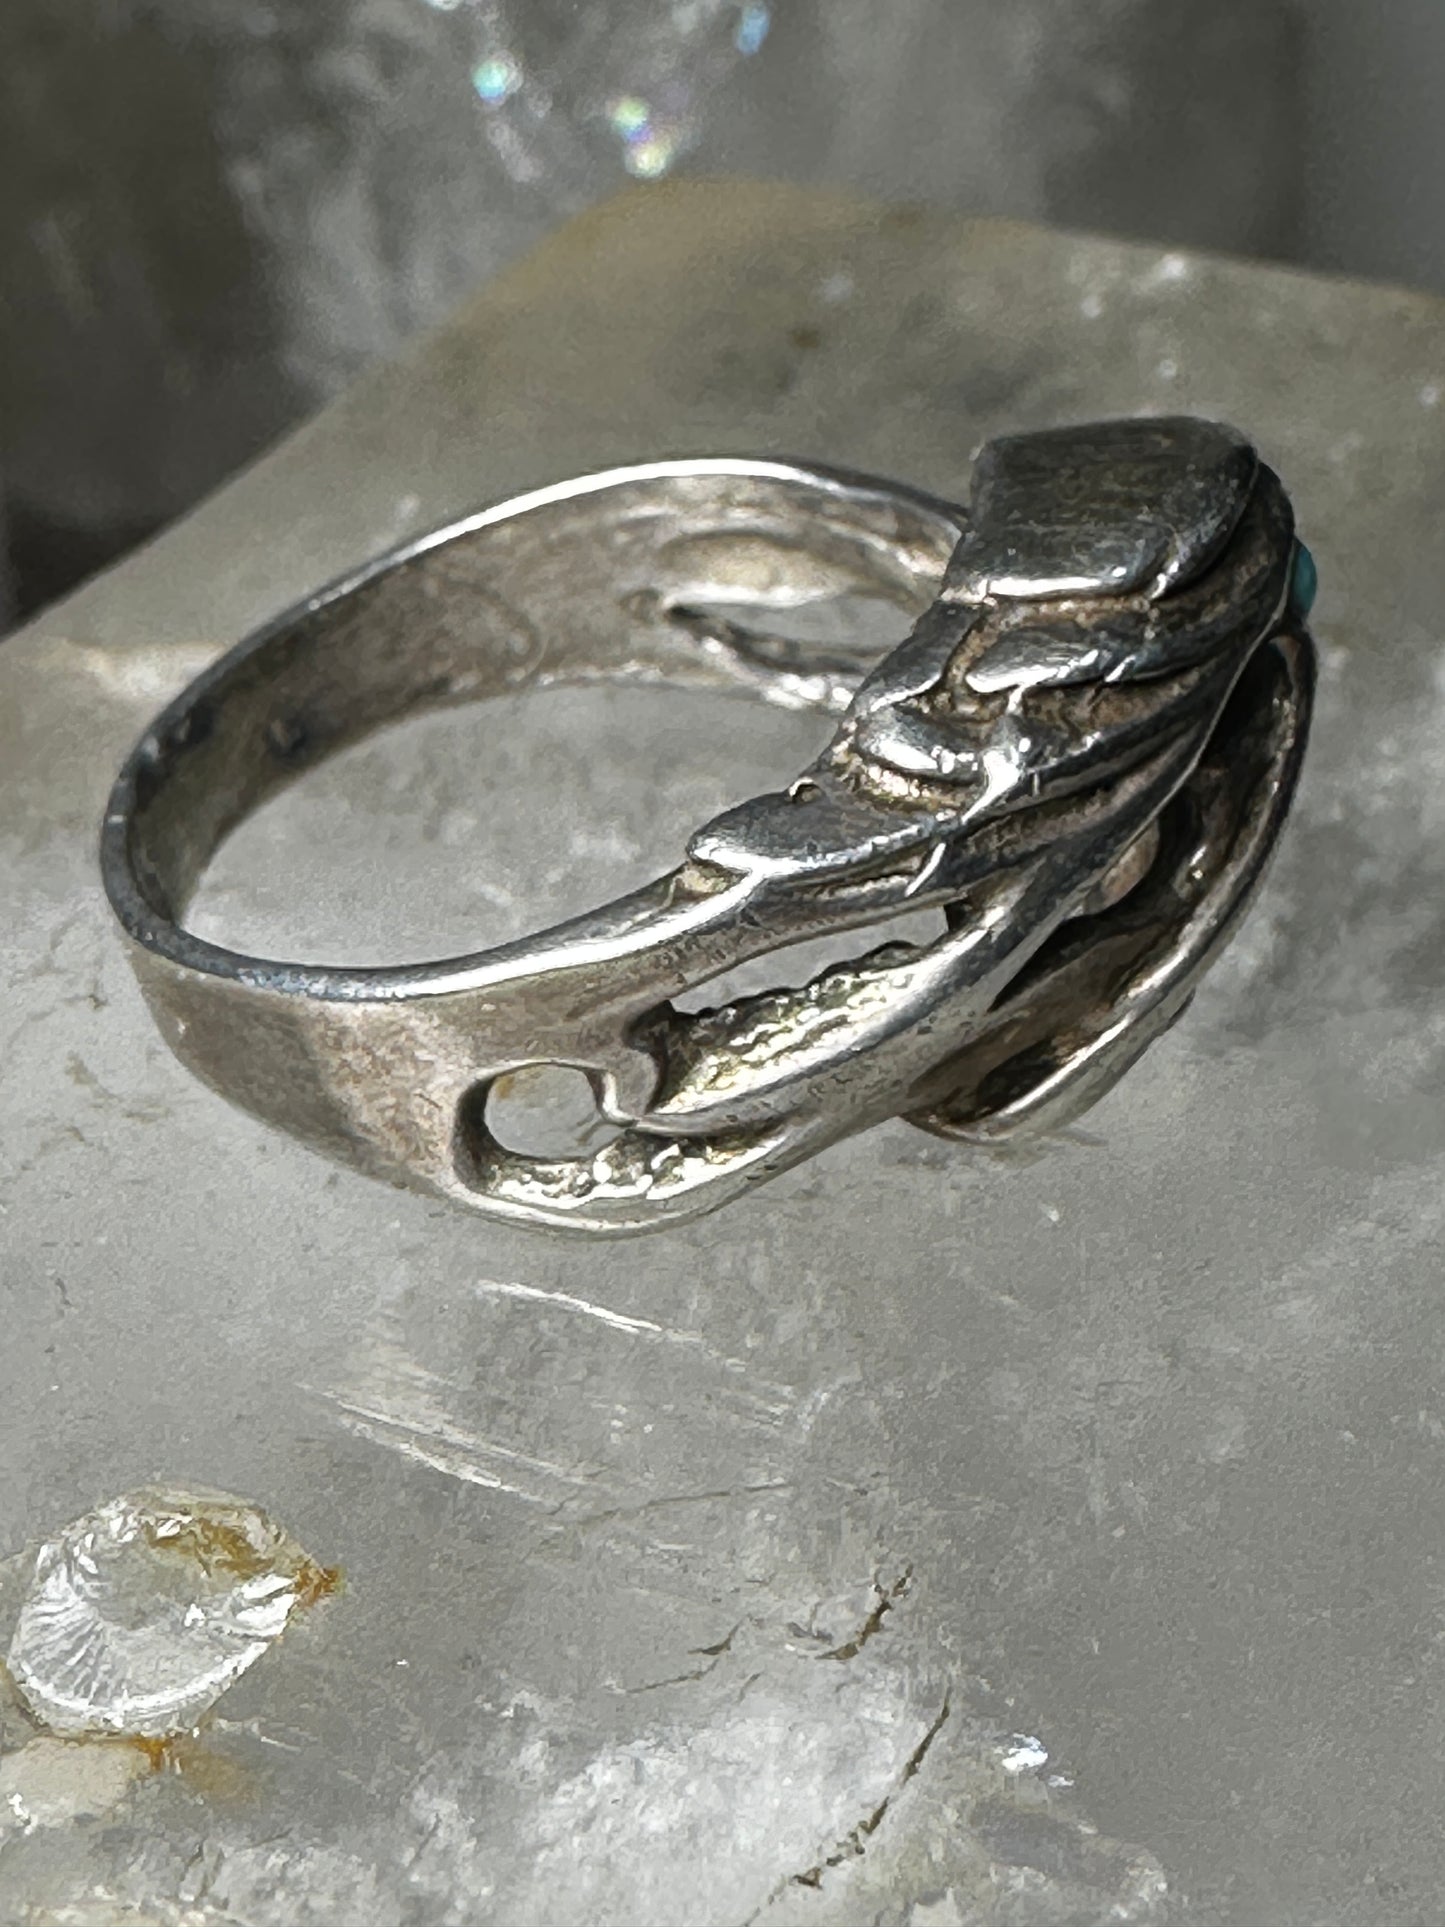 Eagle ring turquoise band size 11  southwest sterling silver vintage women men